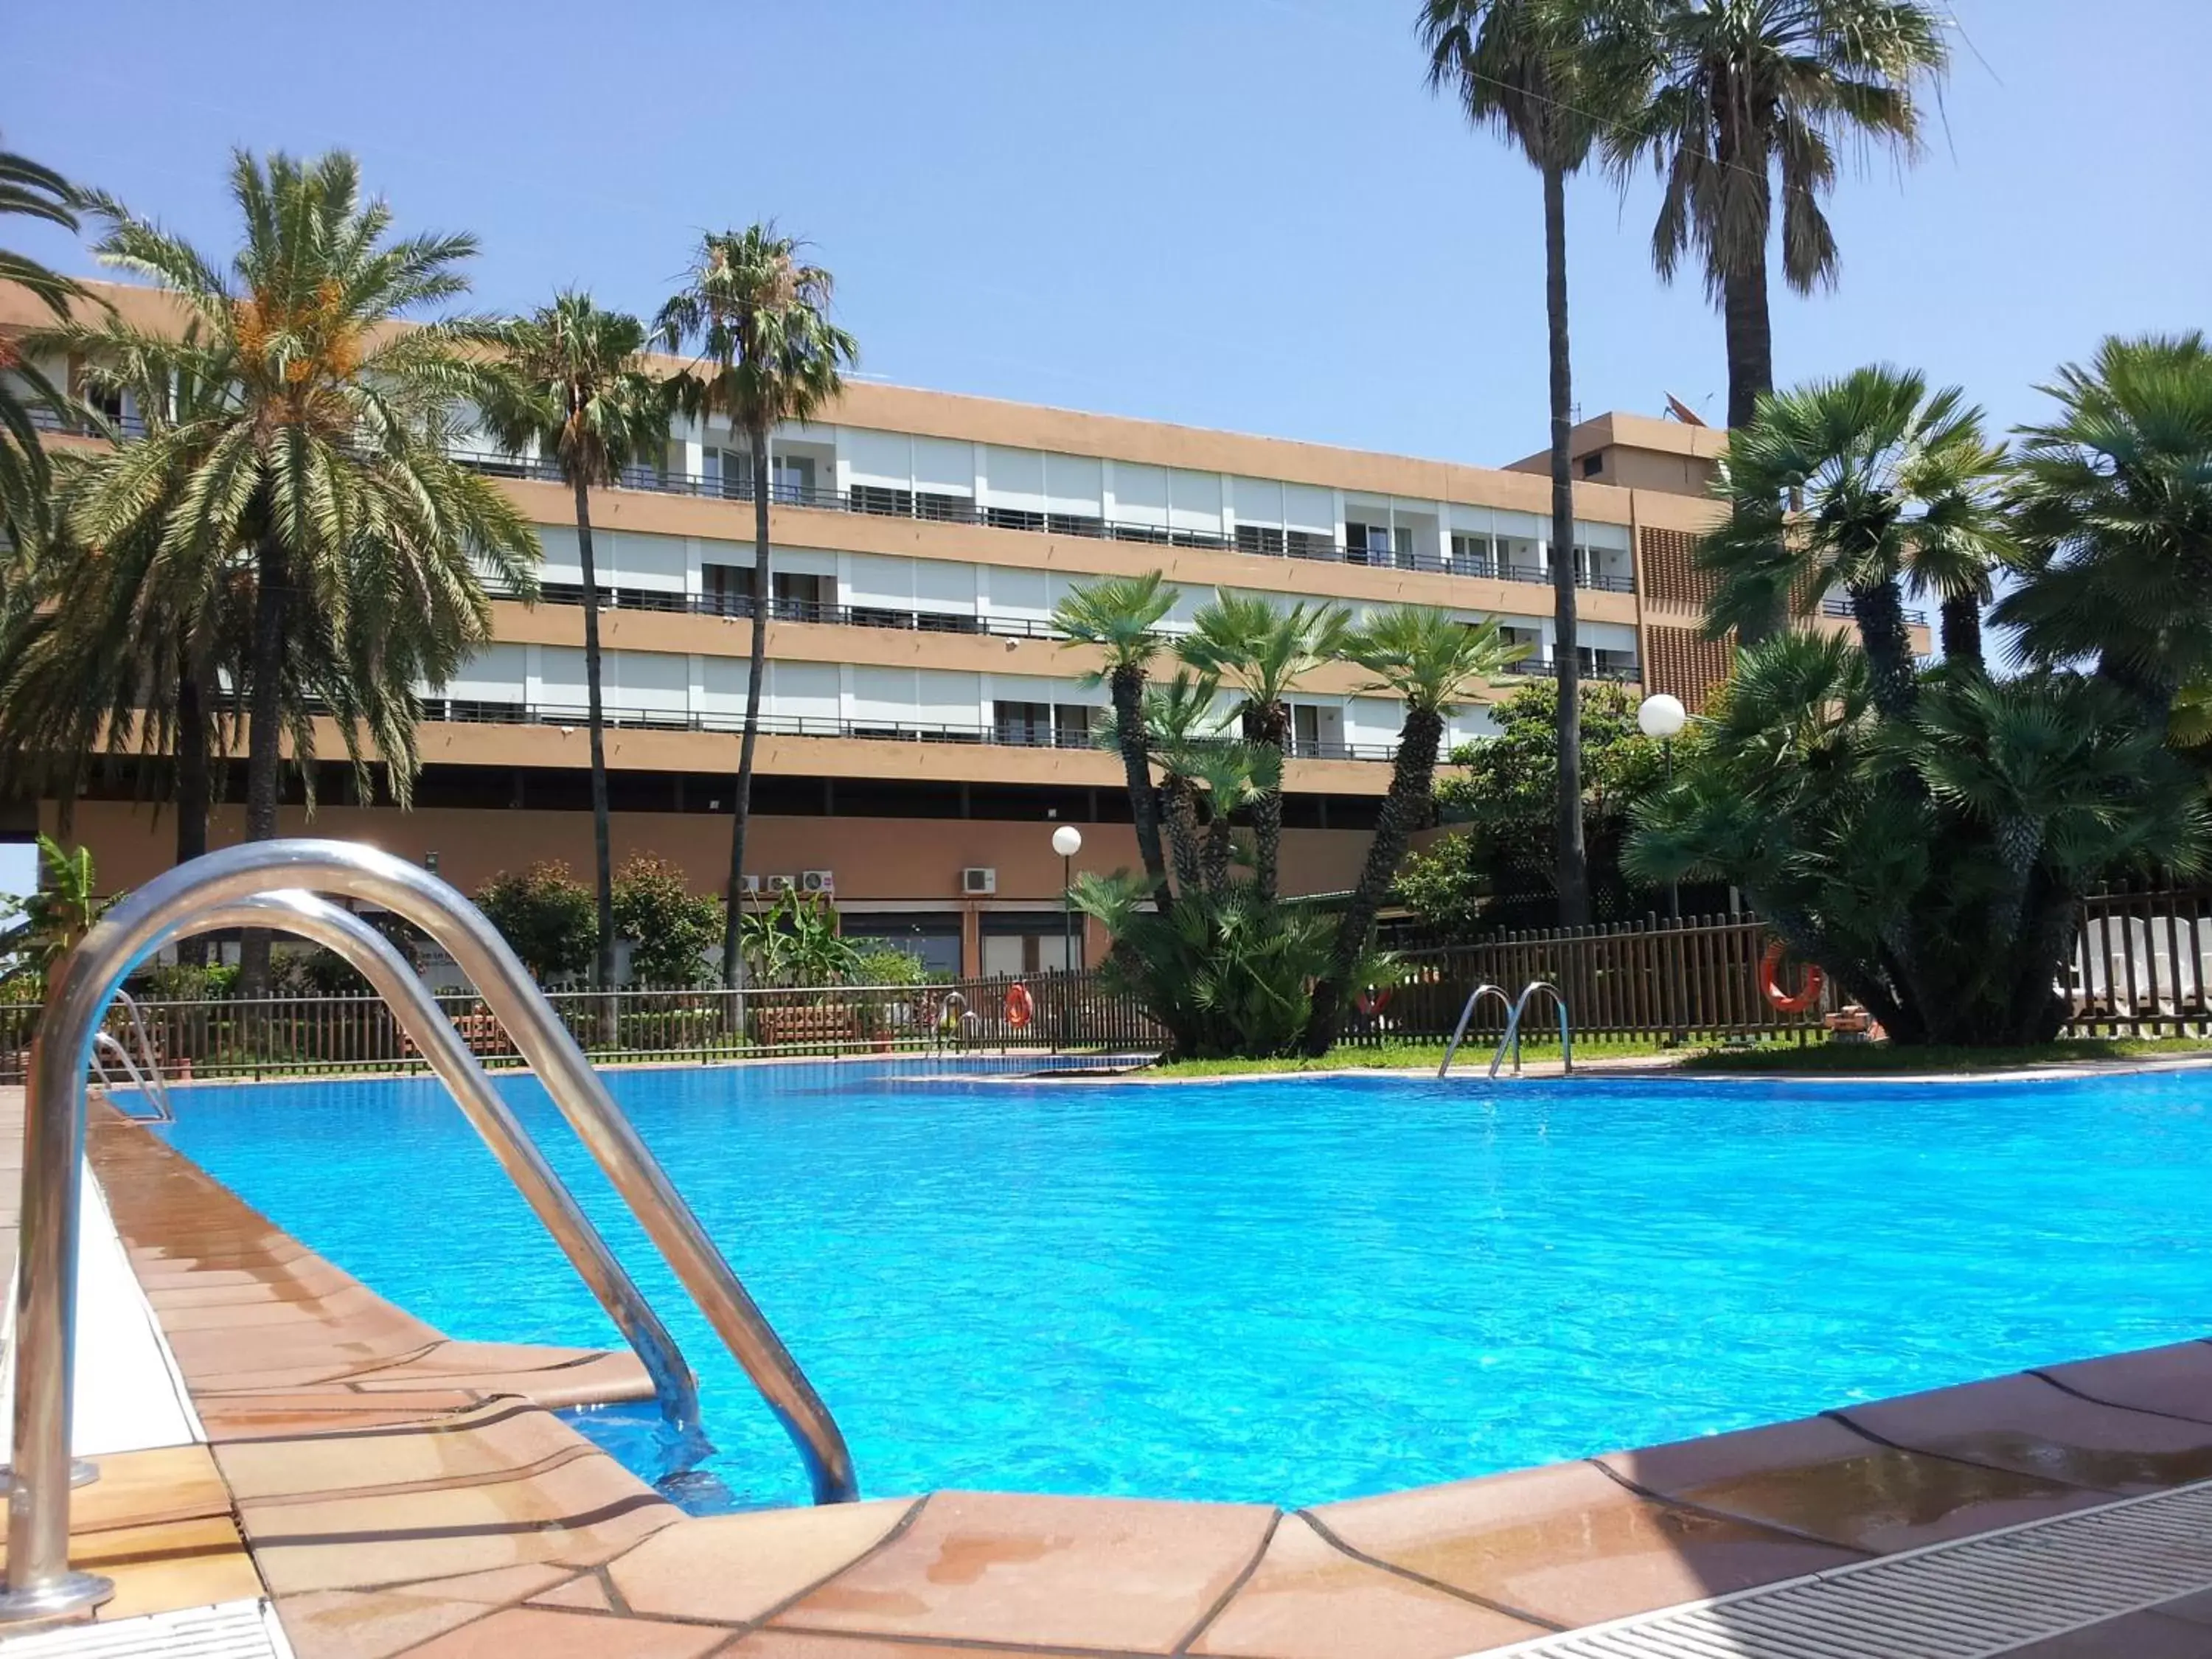 Swimming Pool in Parador de Ceuta